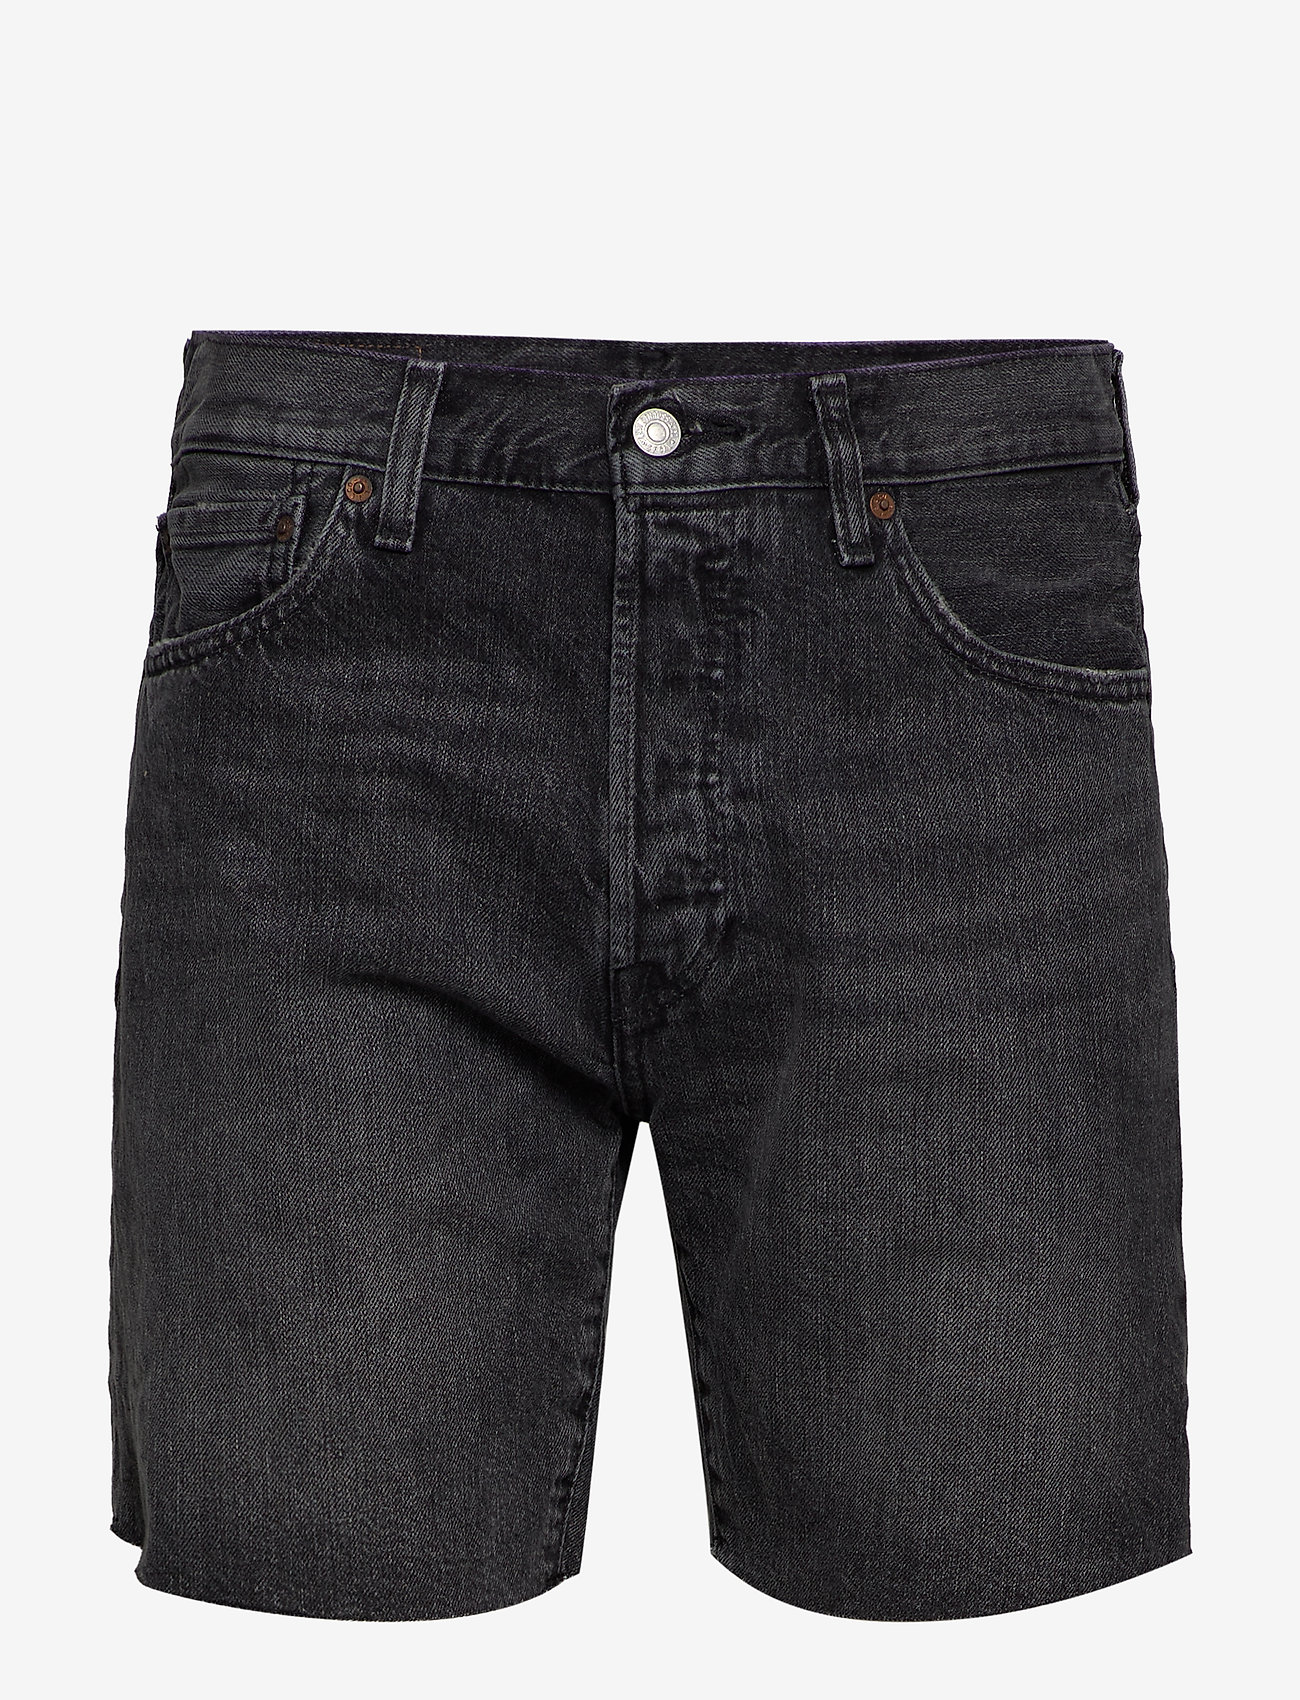 mens levis 501 jean shorts